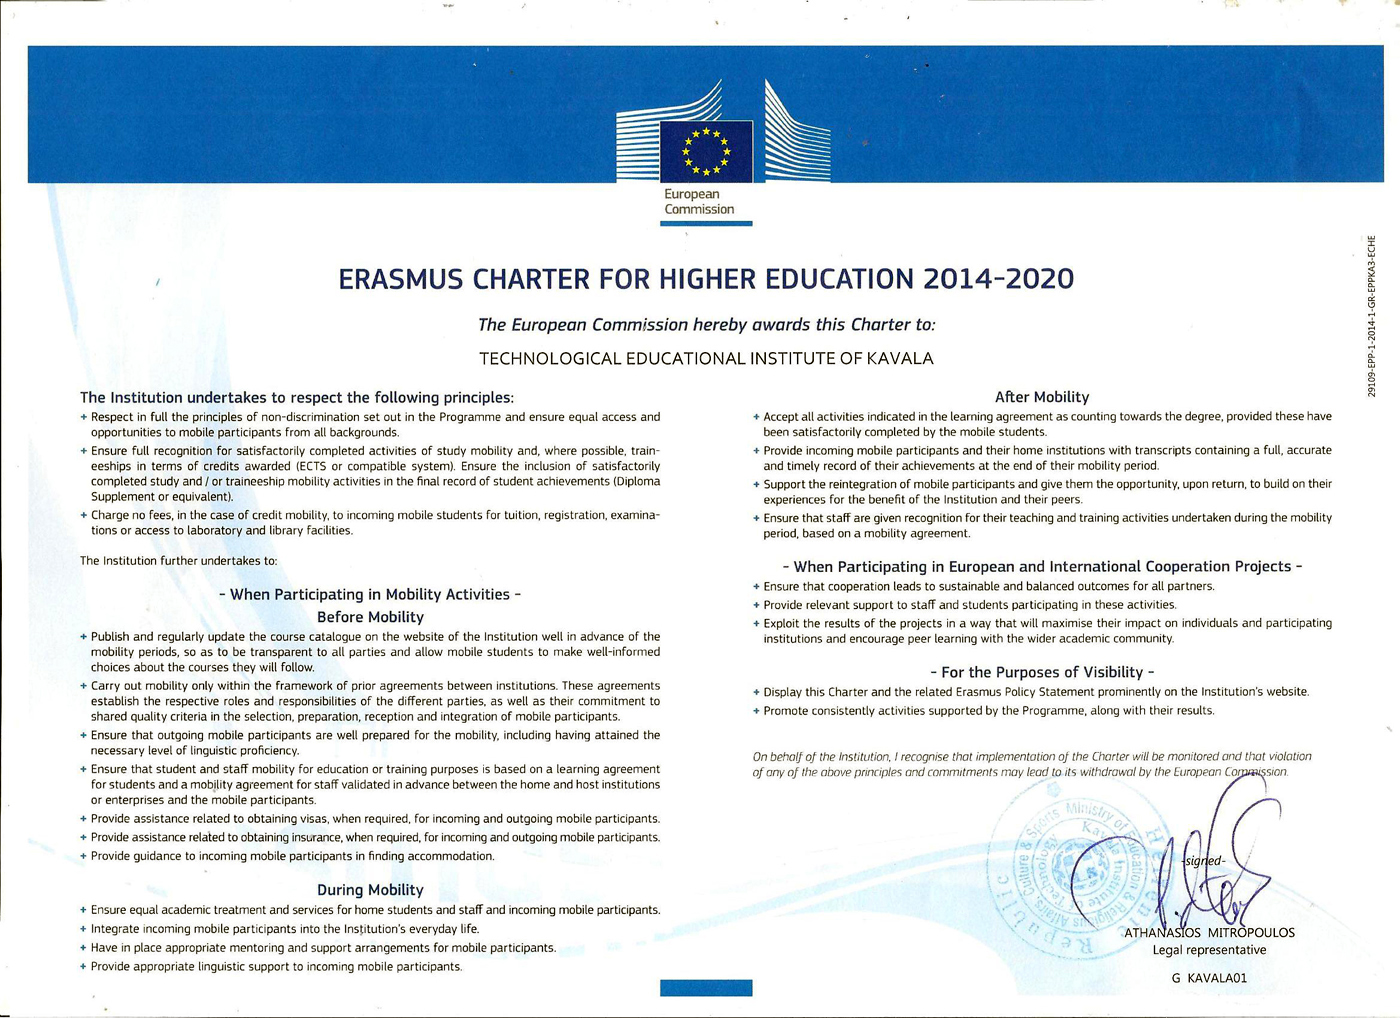 Erasums charter for Higher Education 2014 - 2020